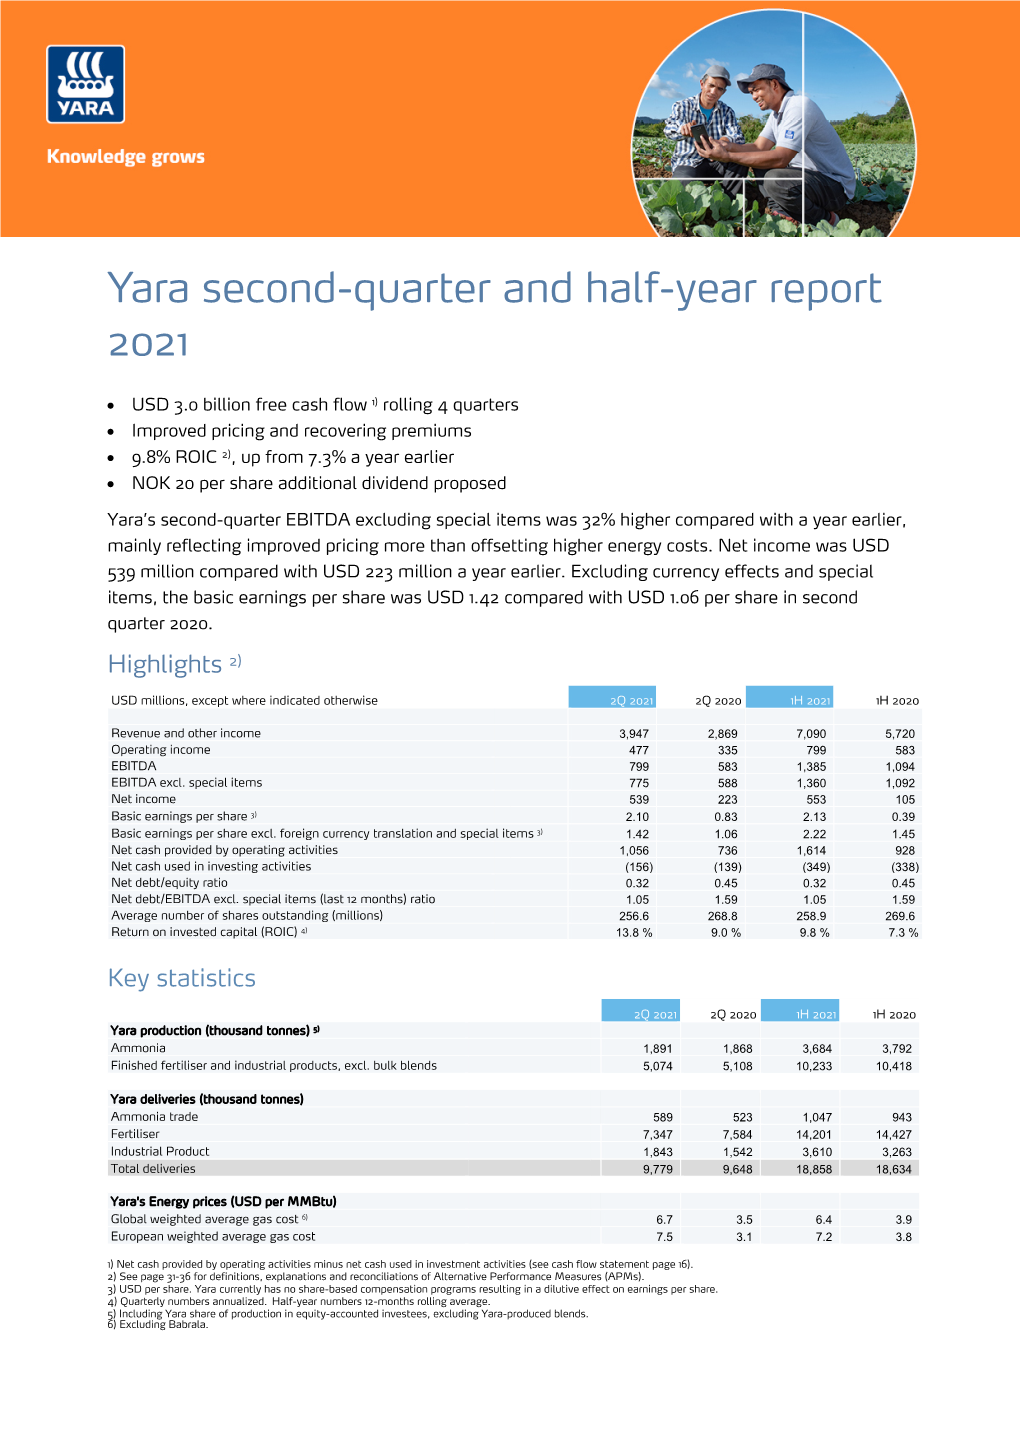 Yara Second-Quarter and Half-Year Report 2021